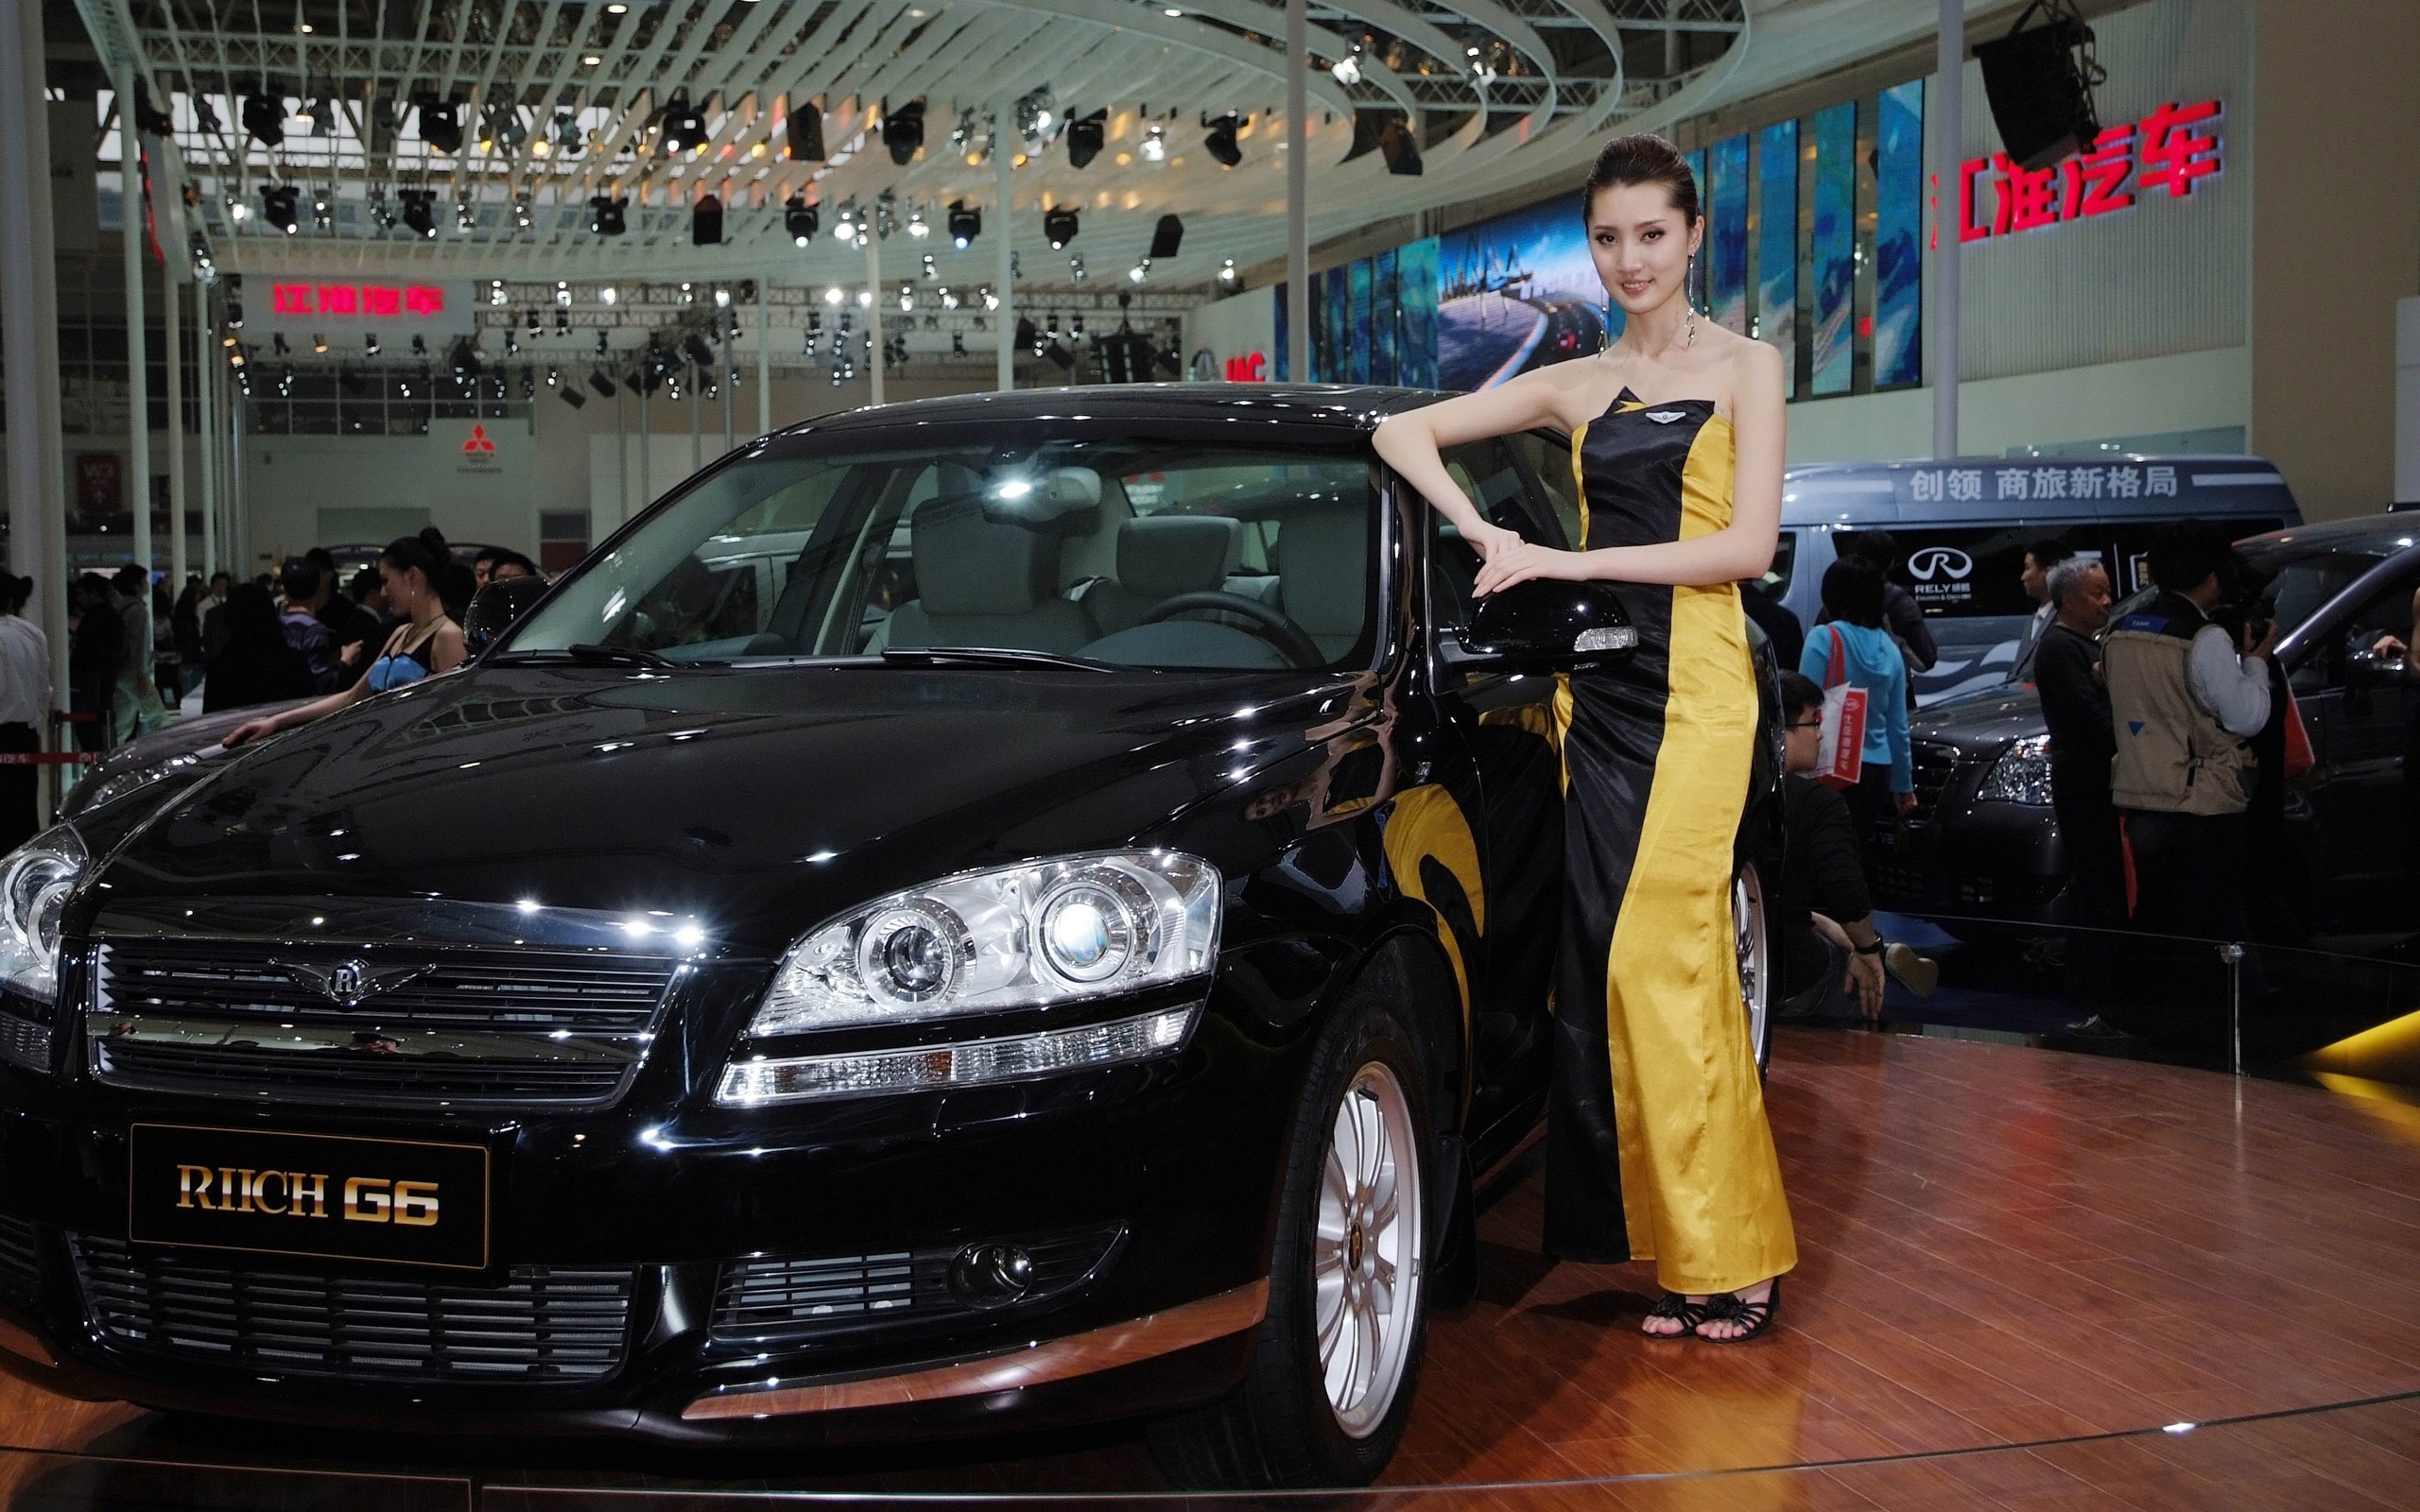 2010 Salón Internacional del Automóvil de Beijing Heung Che belleza (obras barras de refuerzo) #20 - 2560x1600